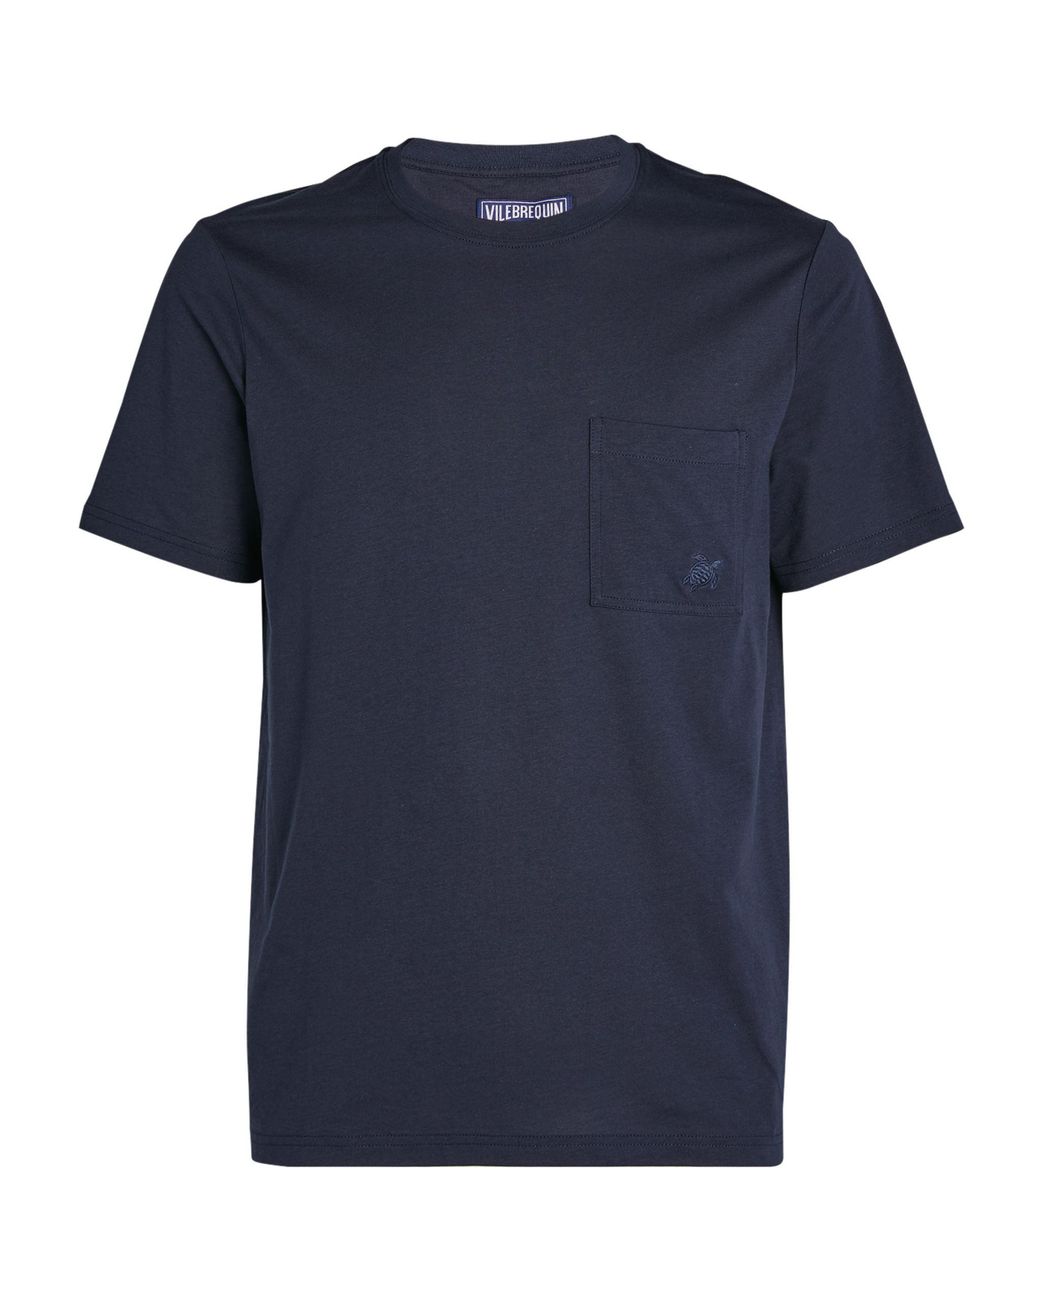 Vilebrequin Cotton T-shirt in Blue for Men - Lyst